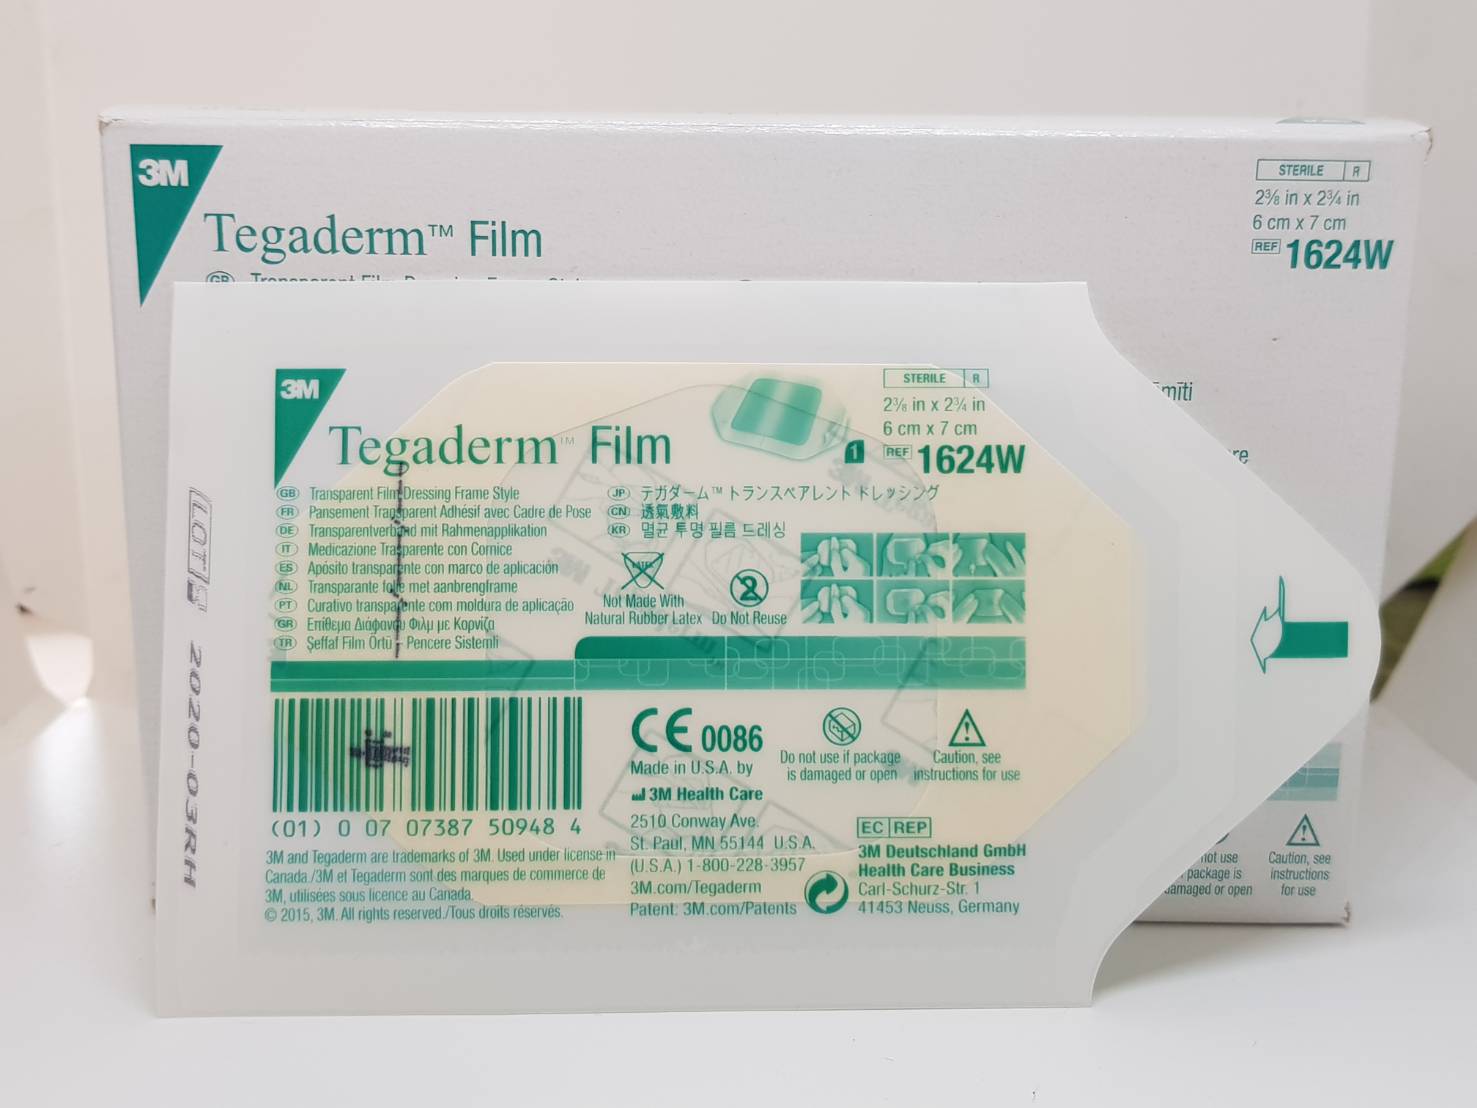 3M Tegaderm Film 6x7 cm แผ่นเทปใสปิดแผลกันน้ำ (1624W) exp 02-2024